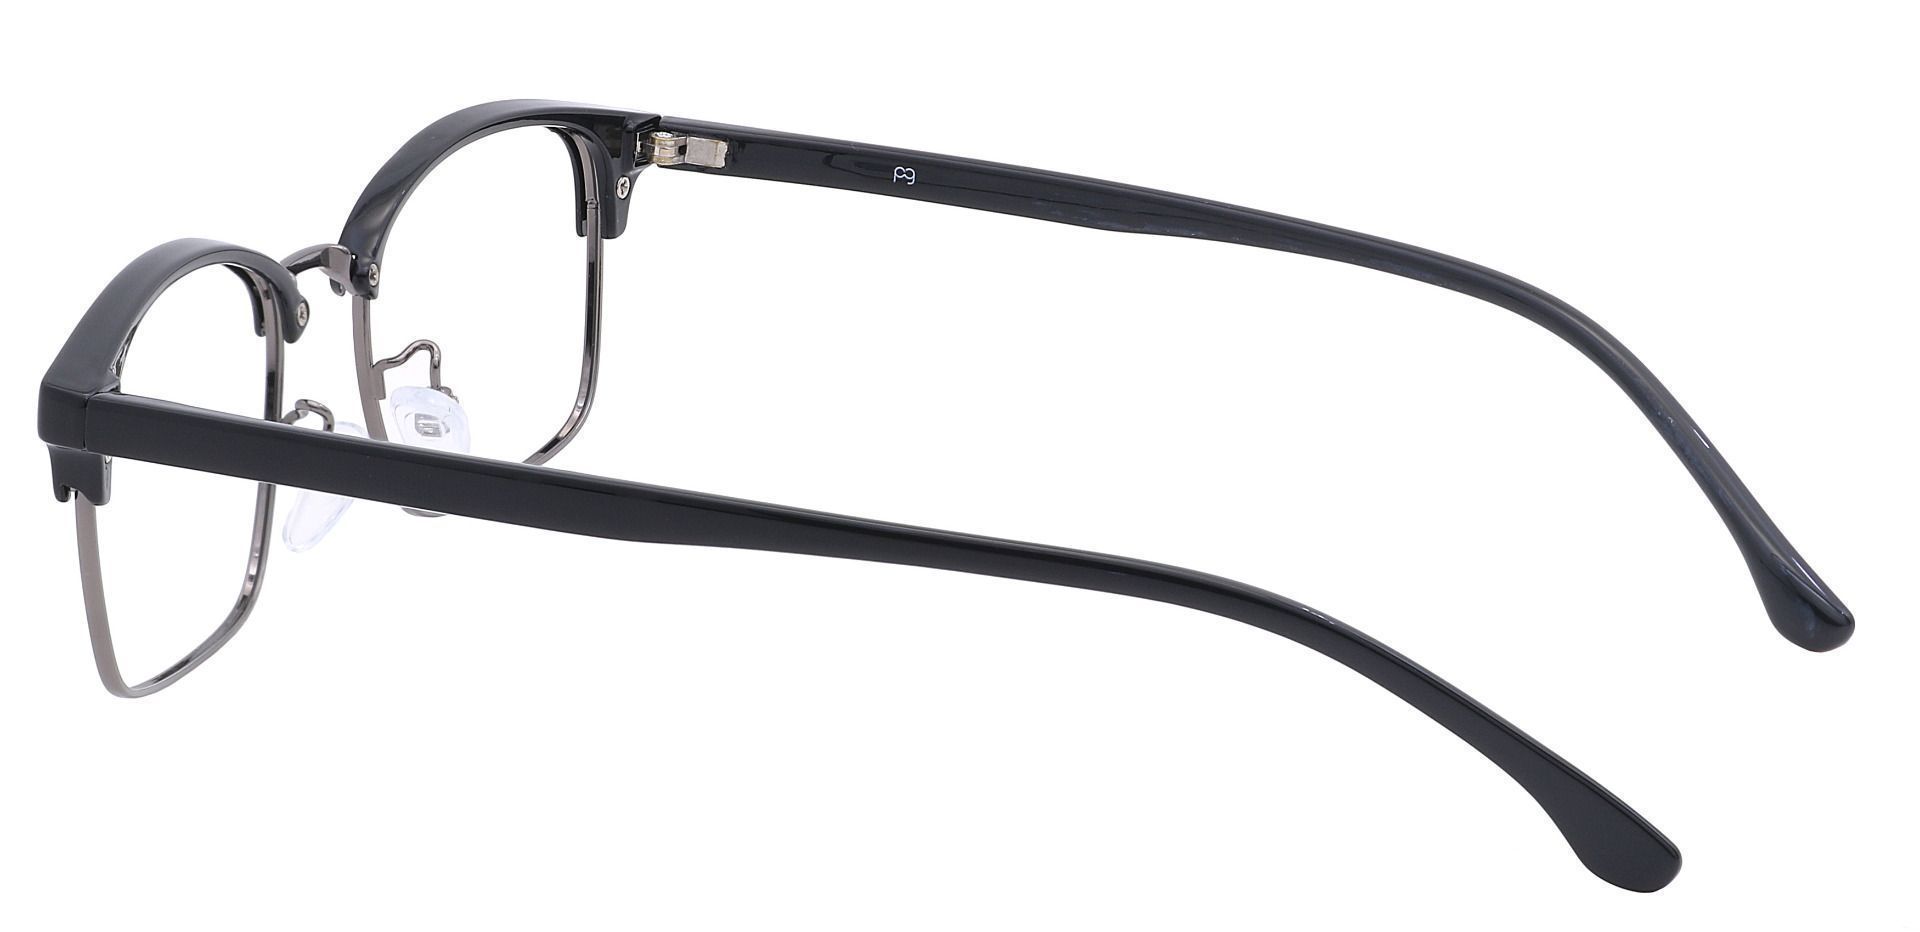 Clover Browline Eyeglasses Frame - Black